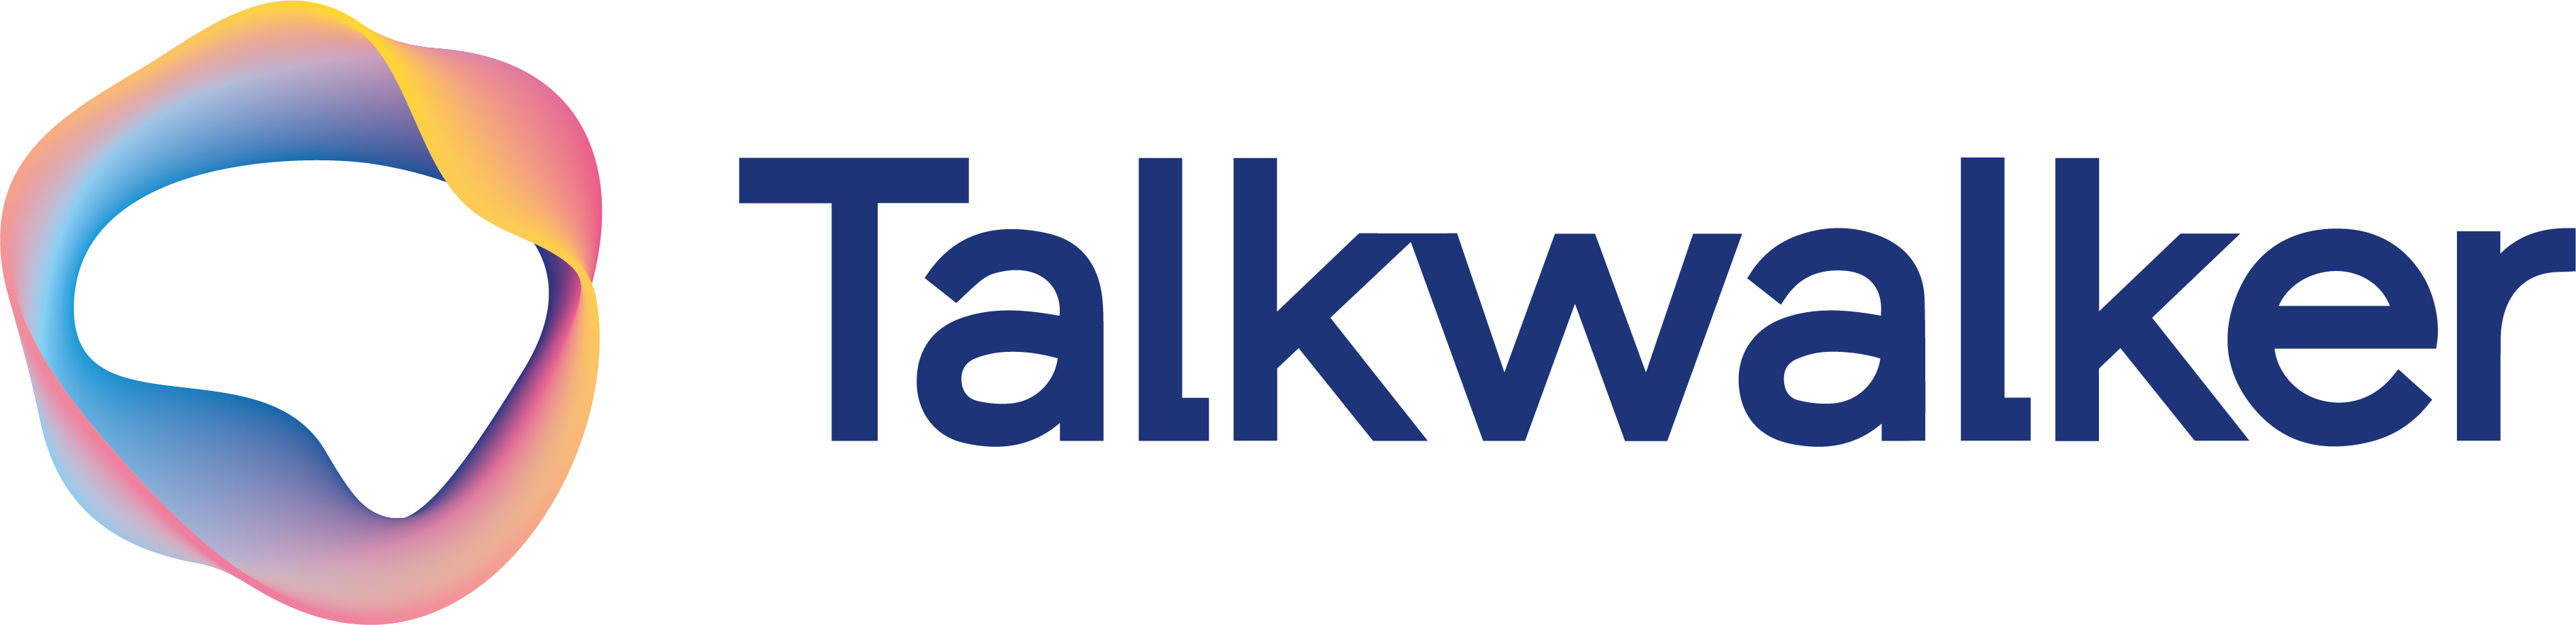 Talkwalker Logo_Full_Blue-4